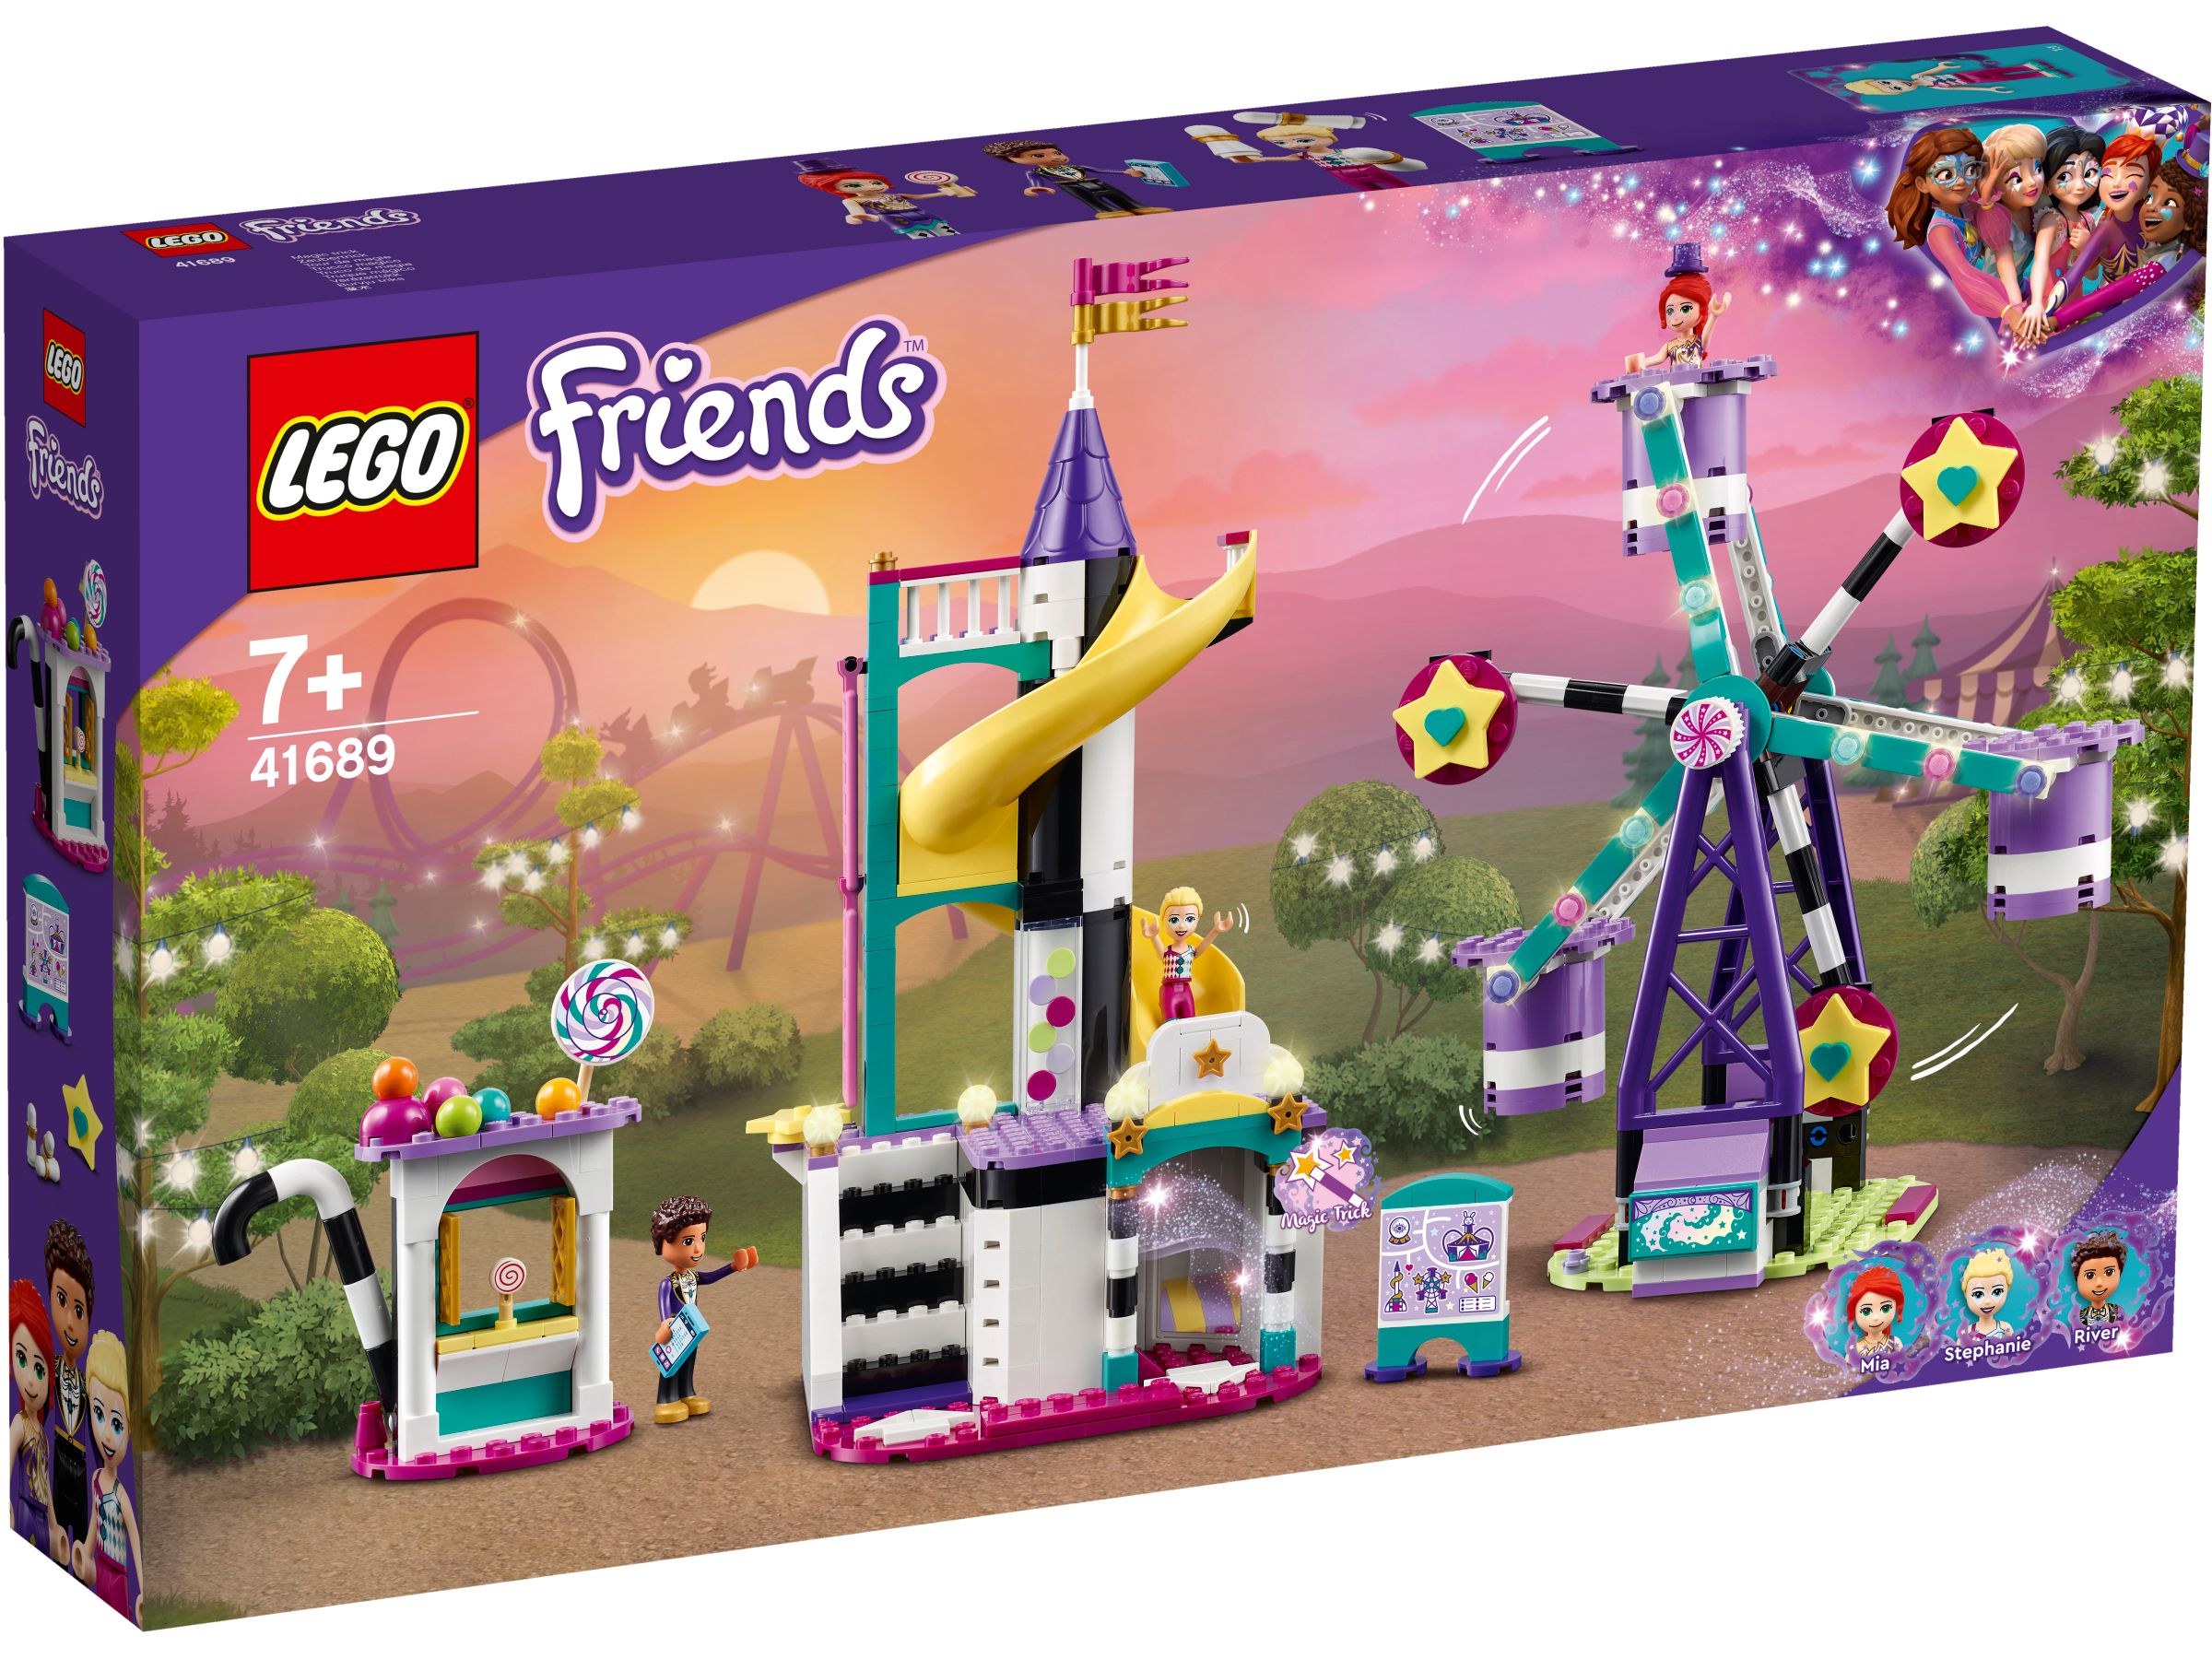 LEGO Friends 41689 Magisches Riesenrad mit Rutsche LEGO_41689_box1_v29.jpg